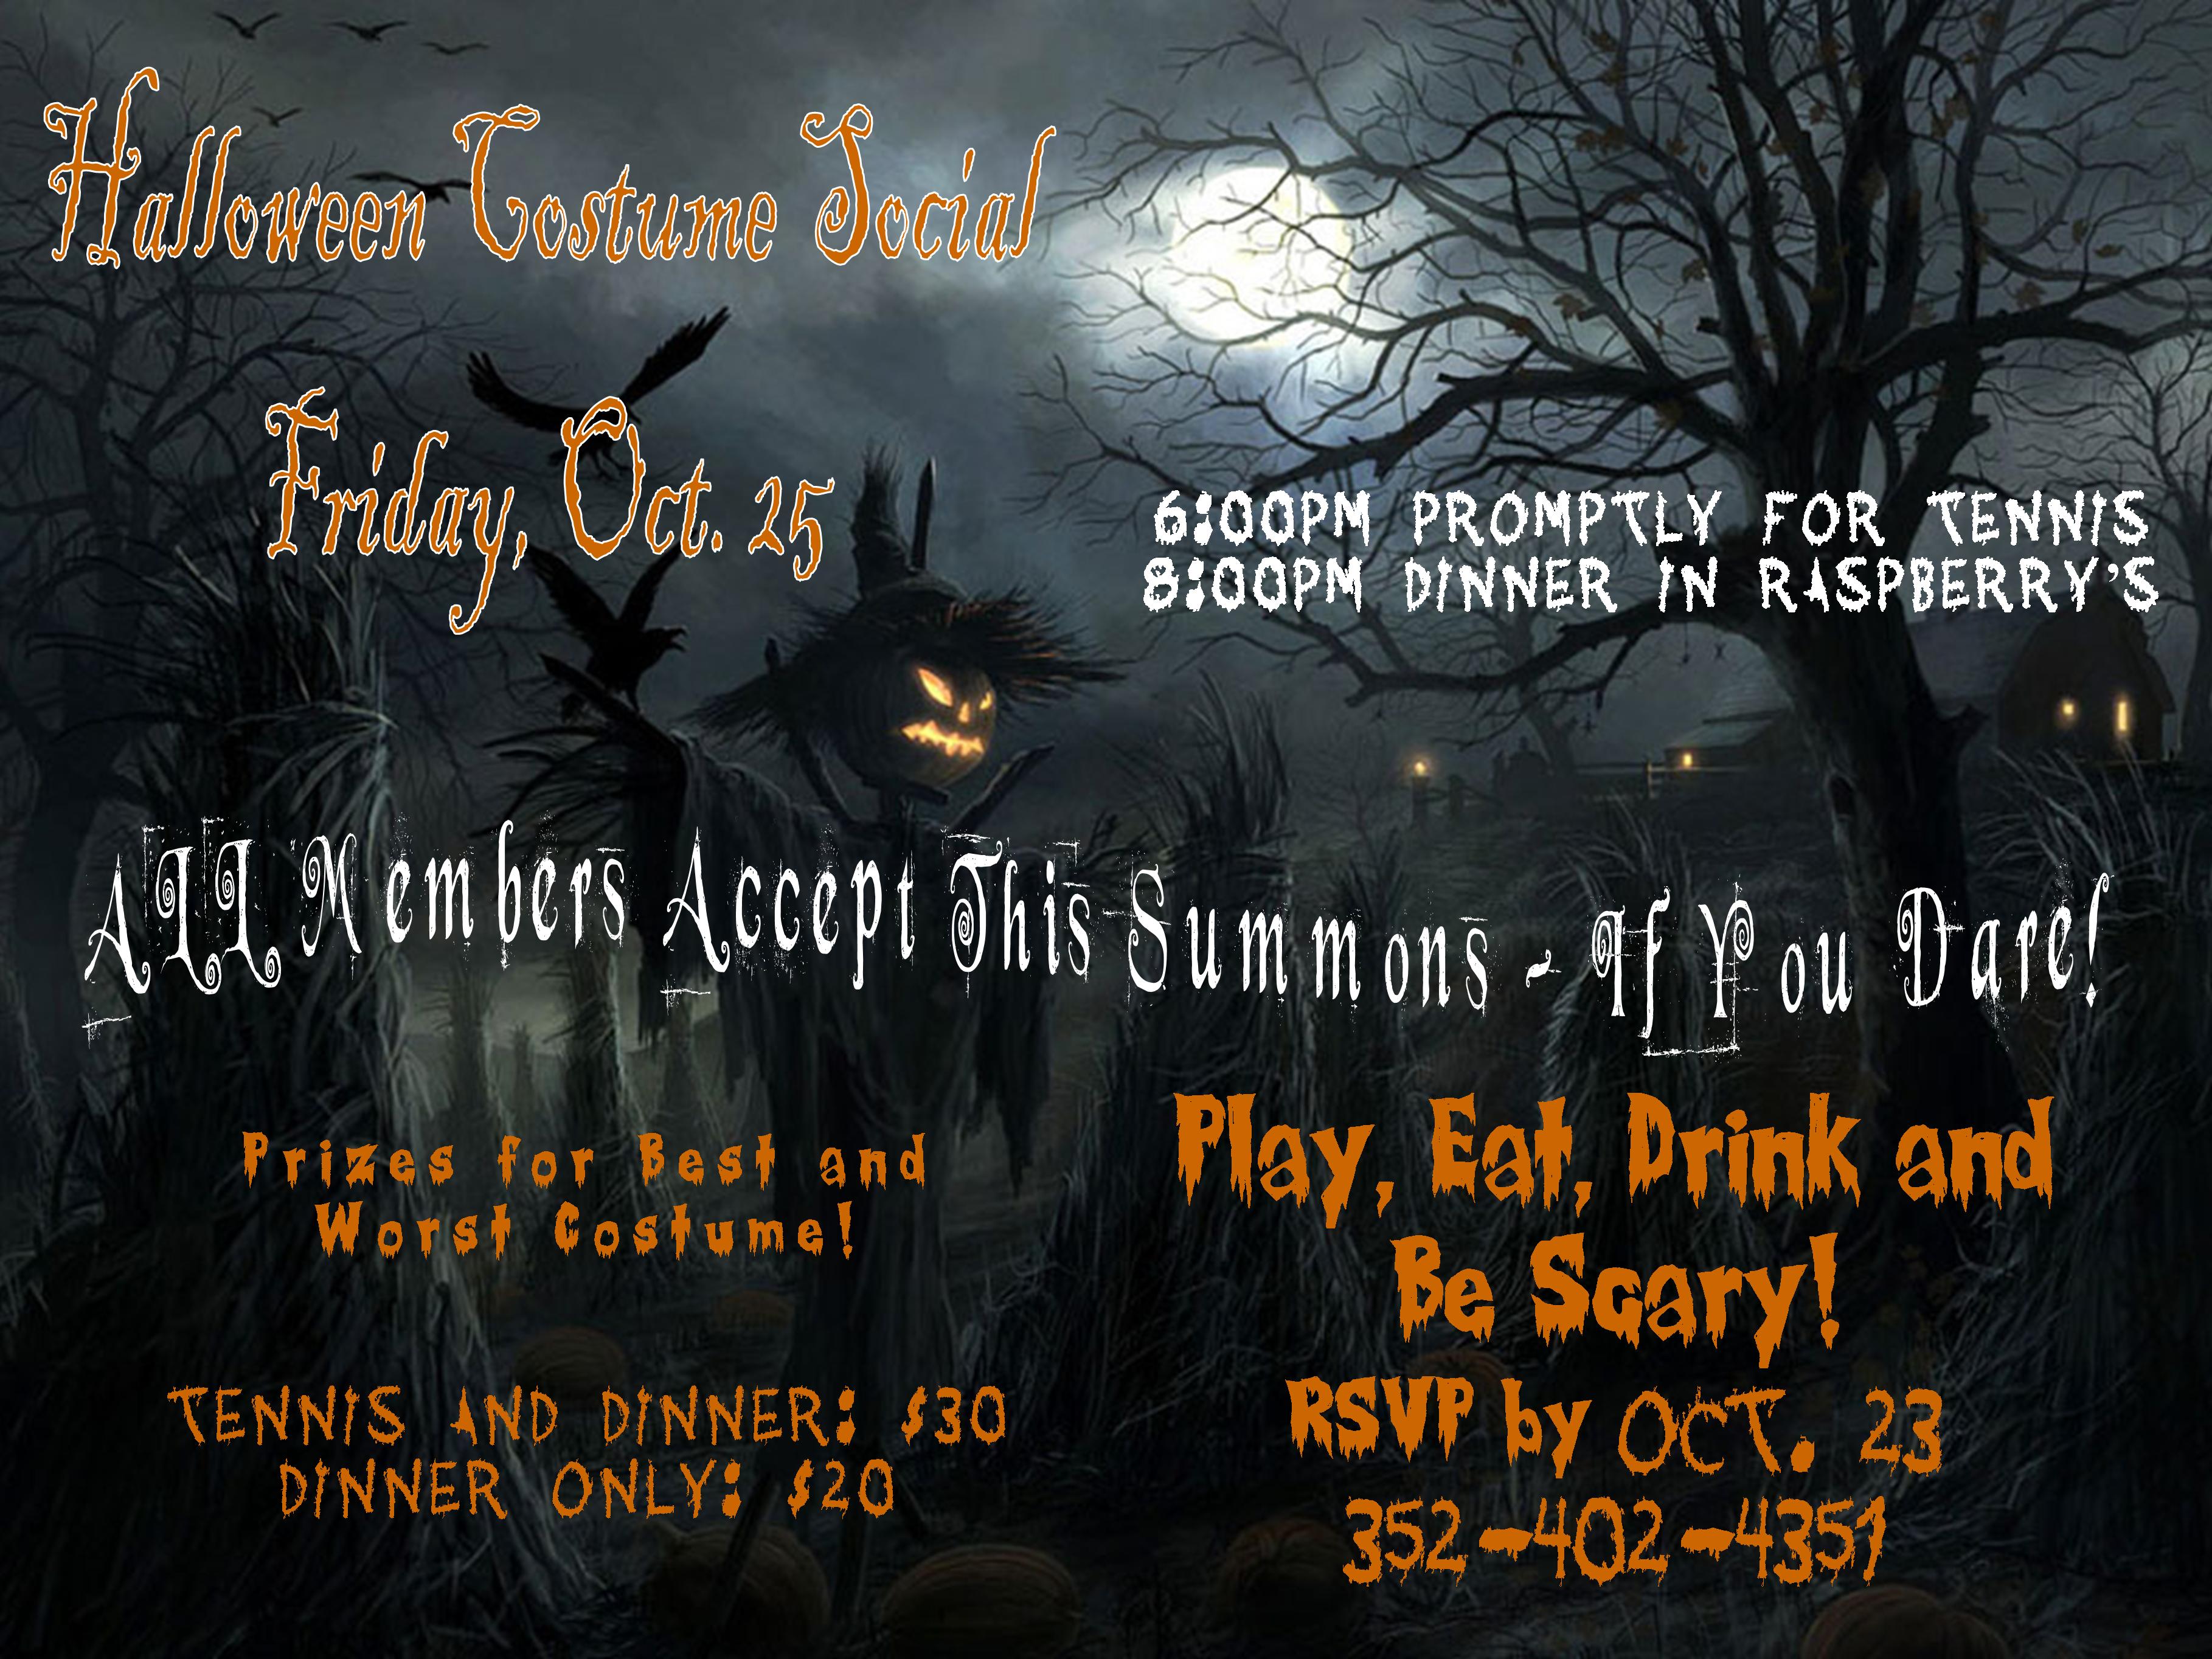 Halloween Costume Contest & Tennis Social Golden Ocala Events